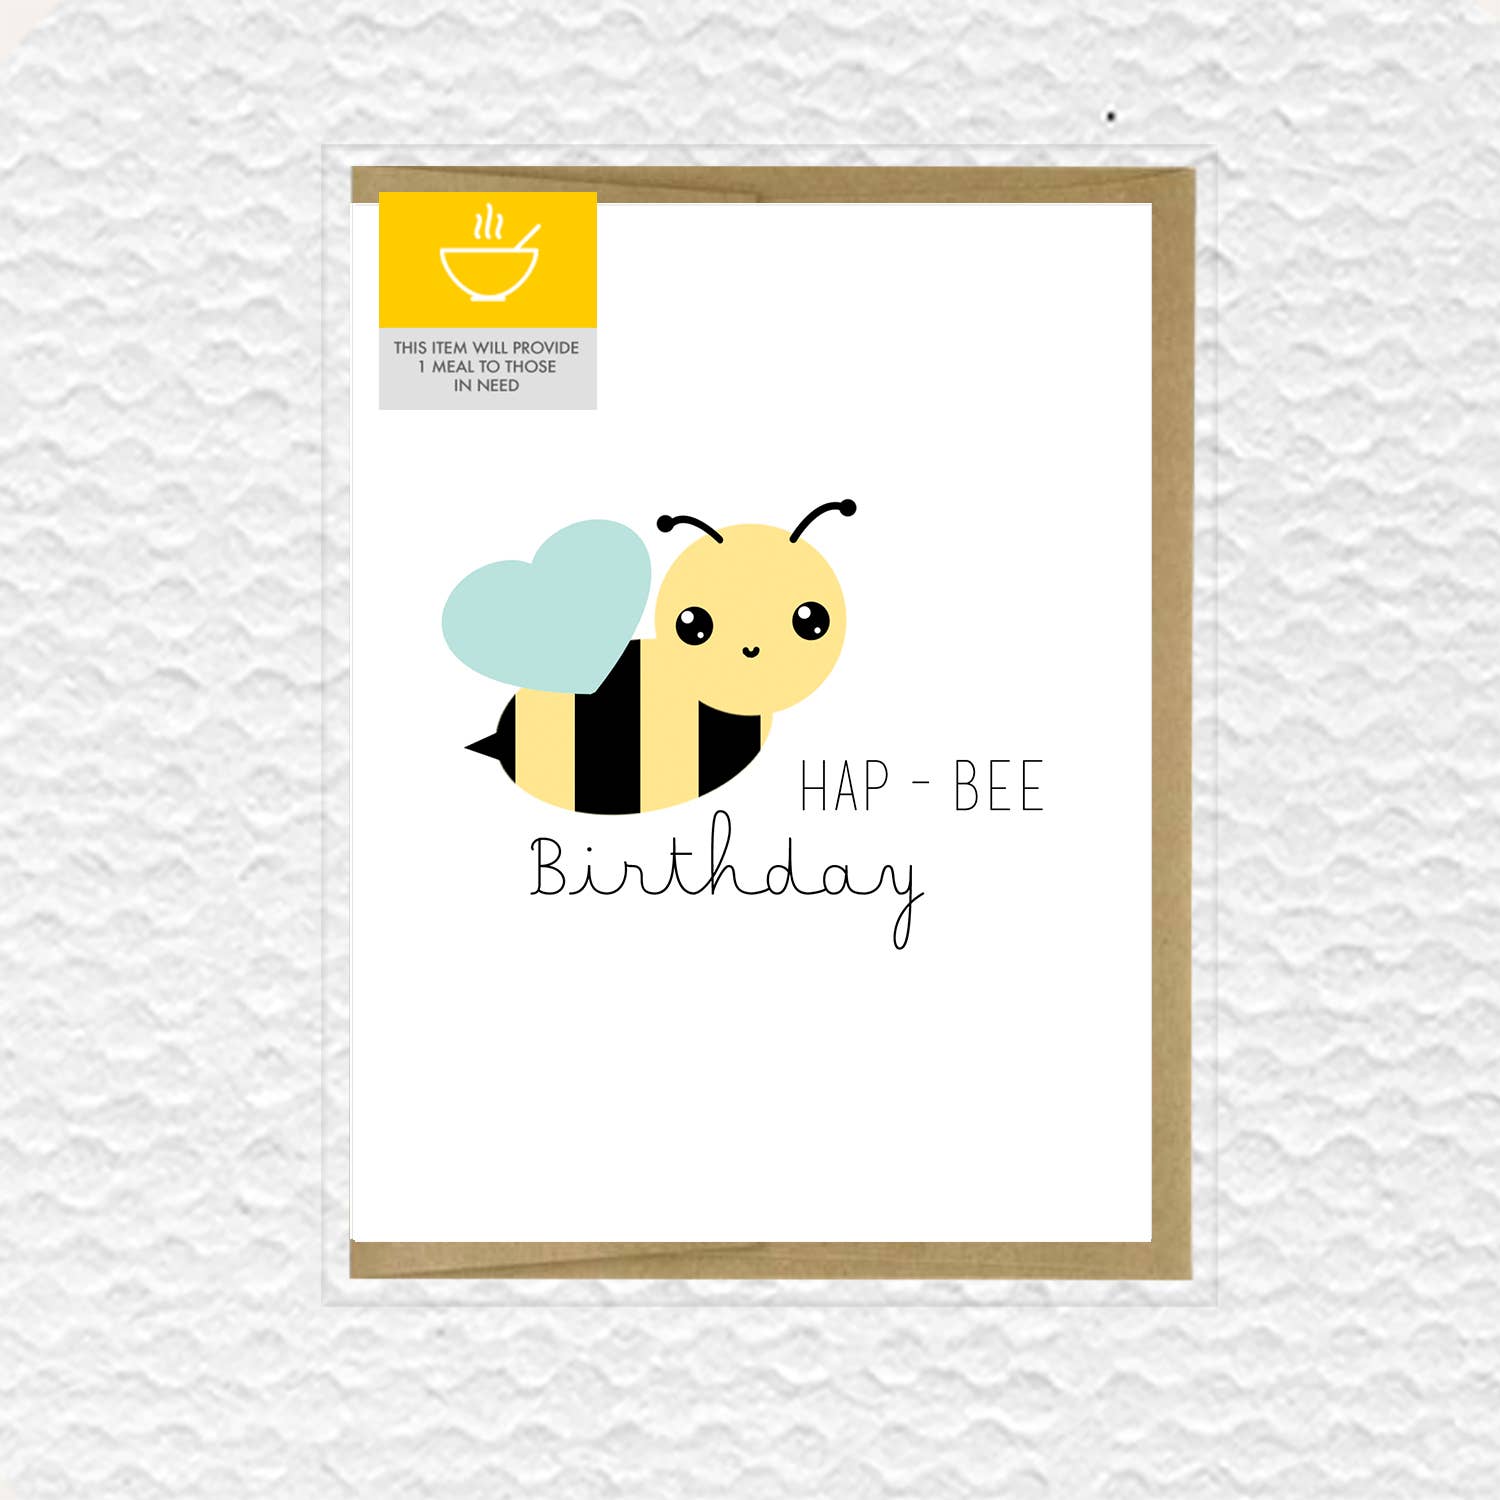 Hap-bee Birthday Card